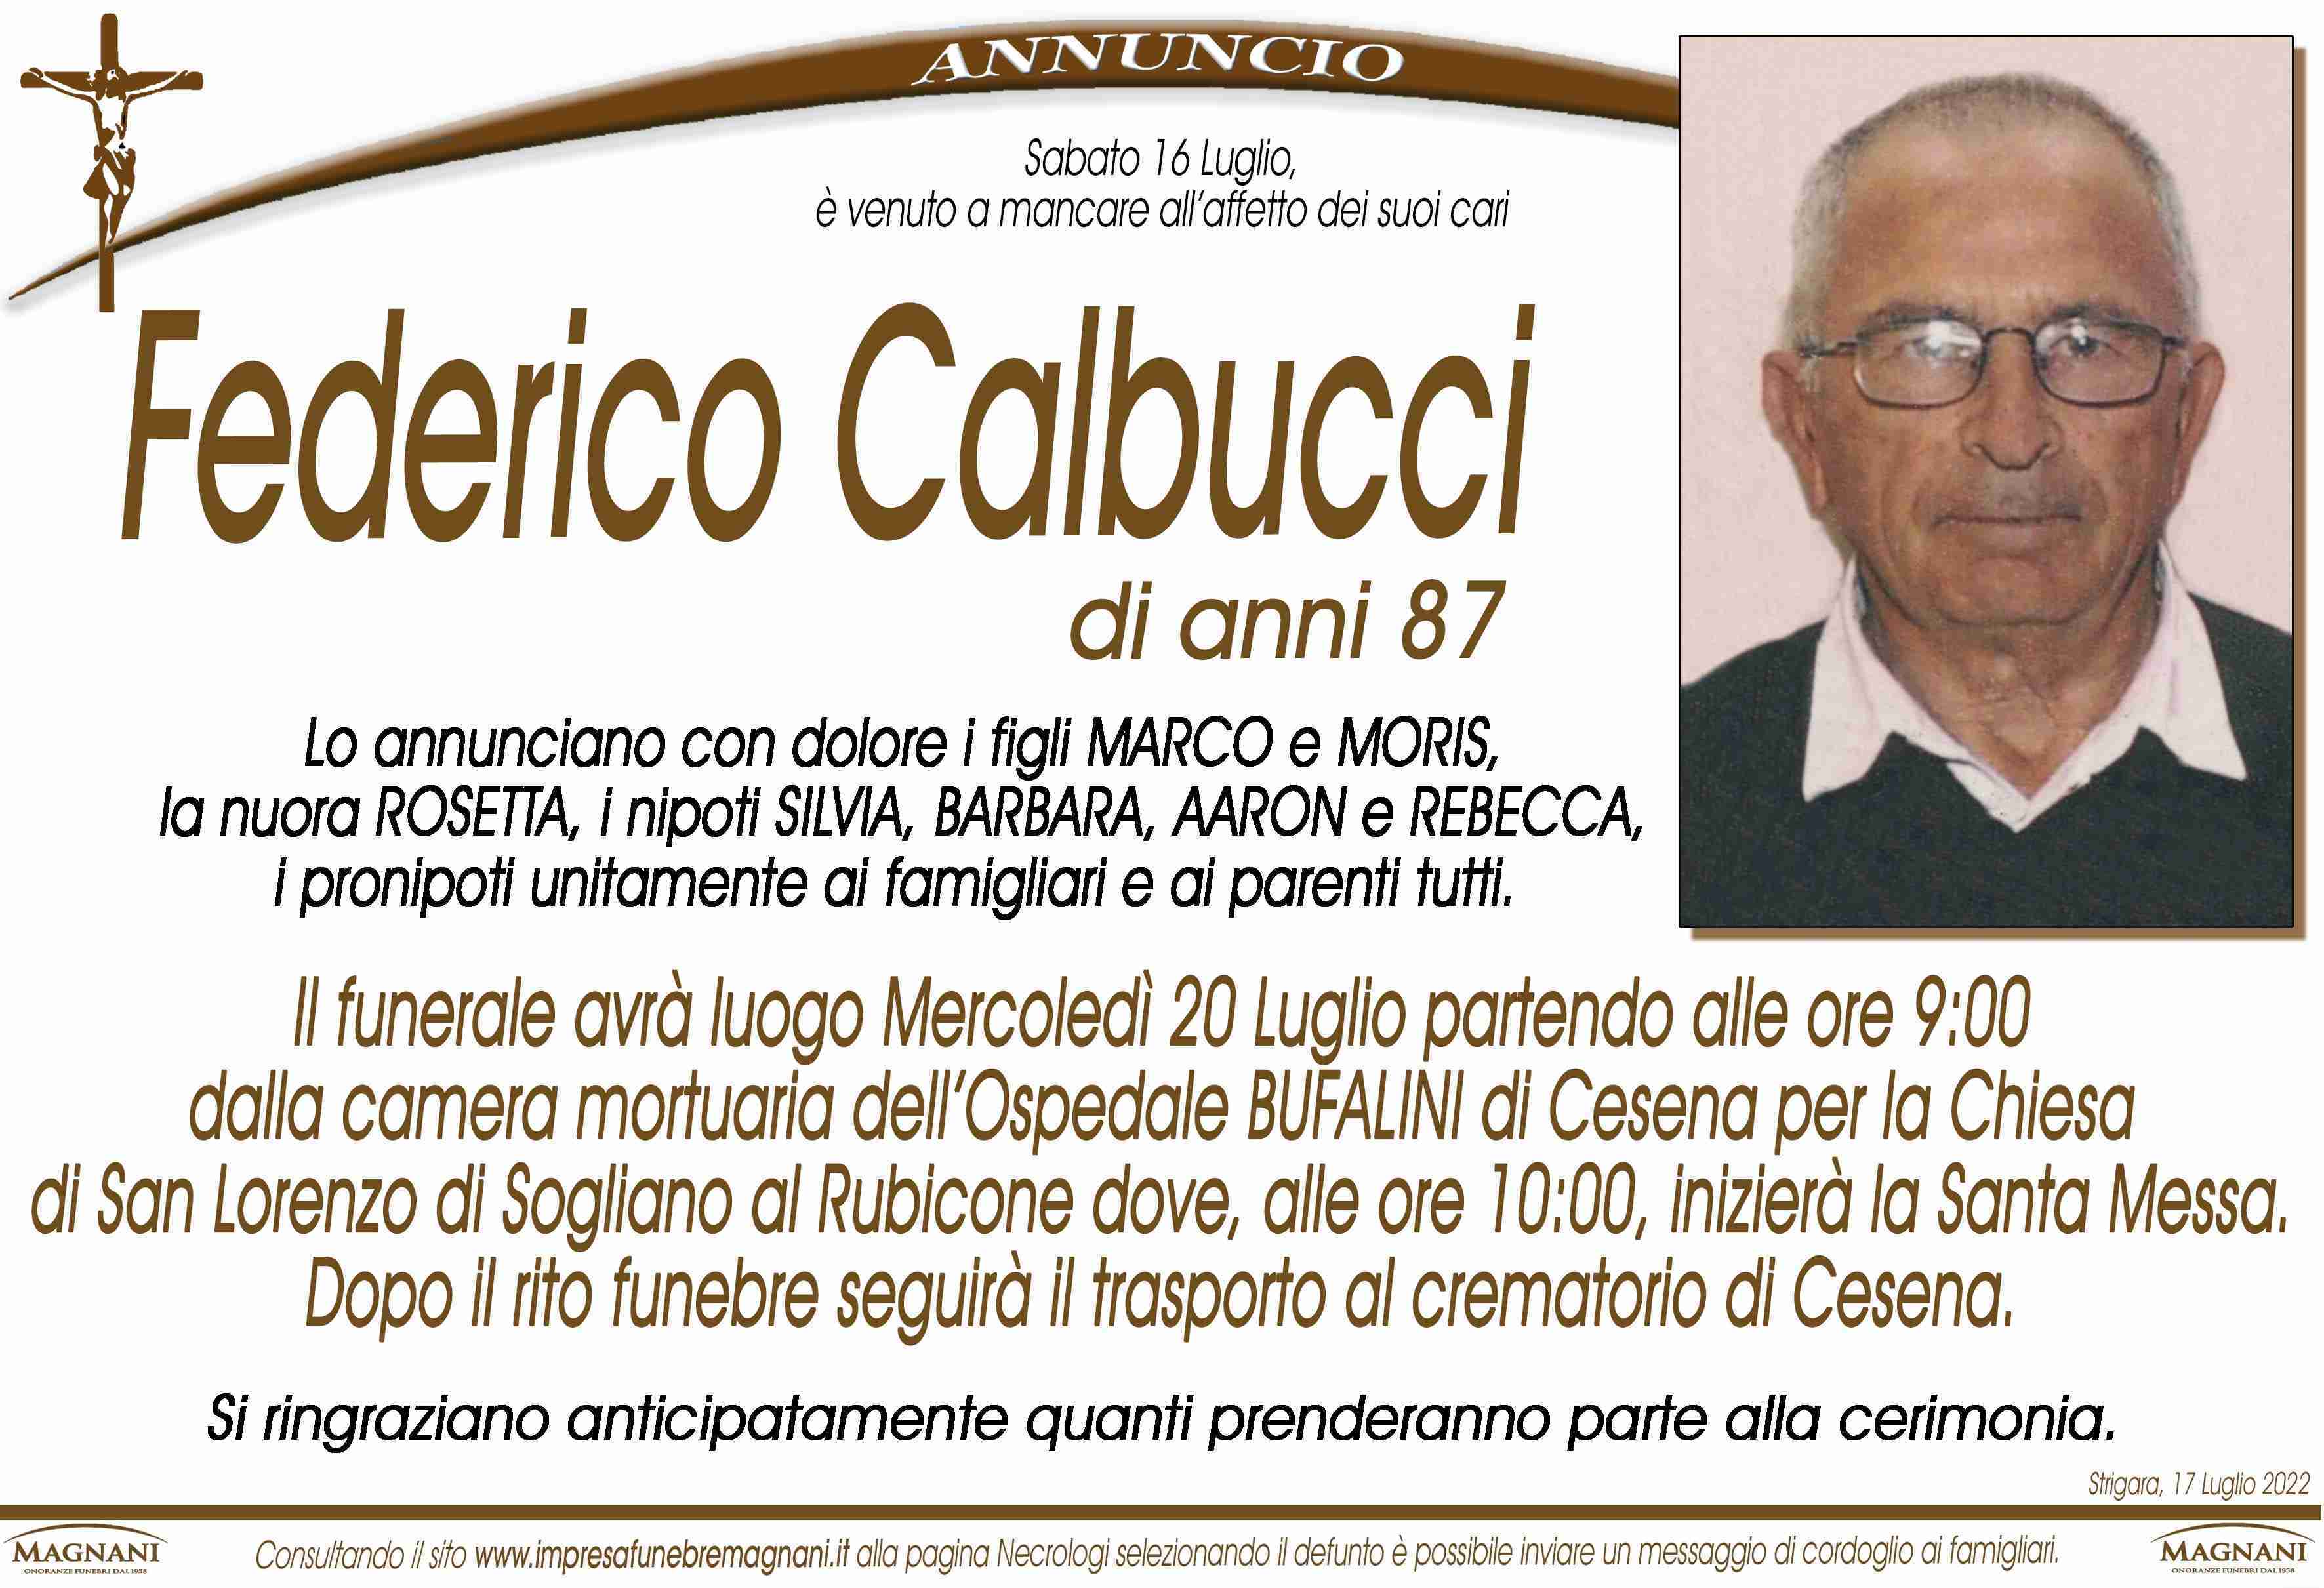 Federico Calbucci